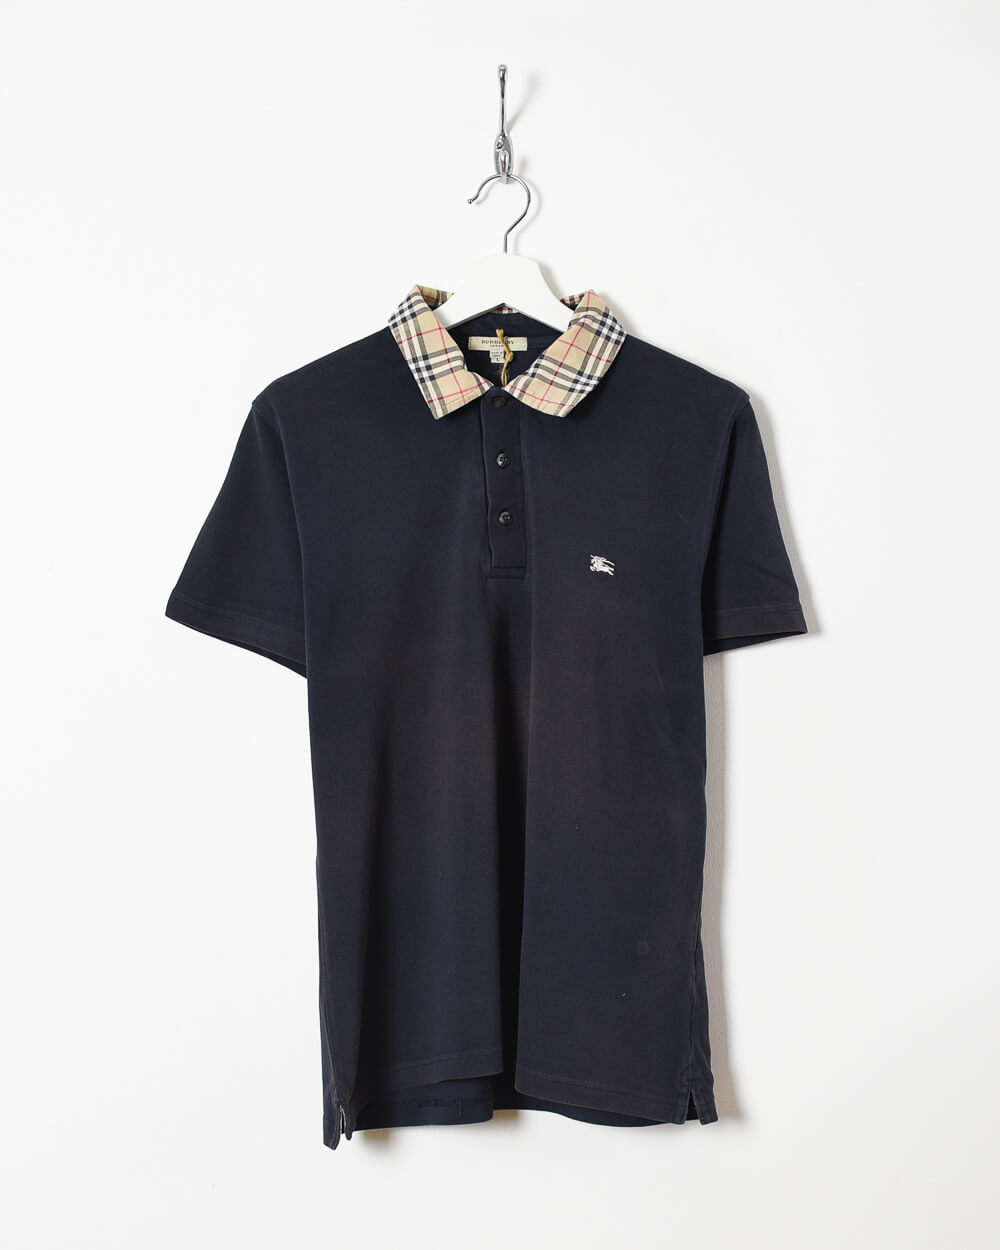 Black Burberry London Polo Shirt - Medium